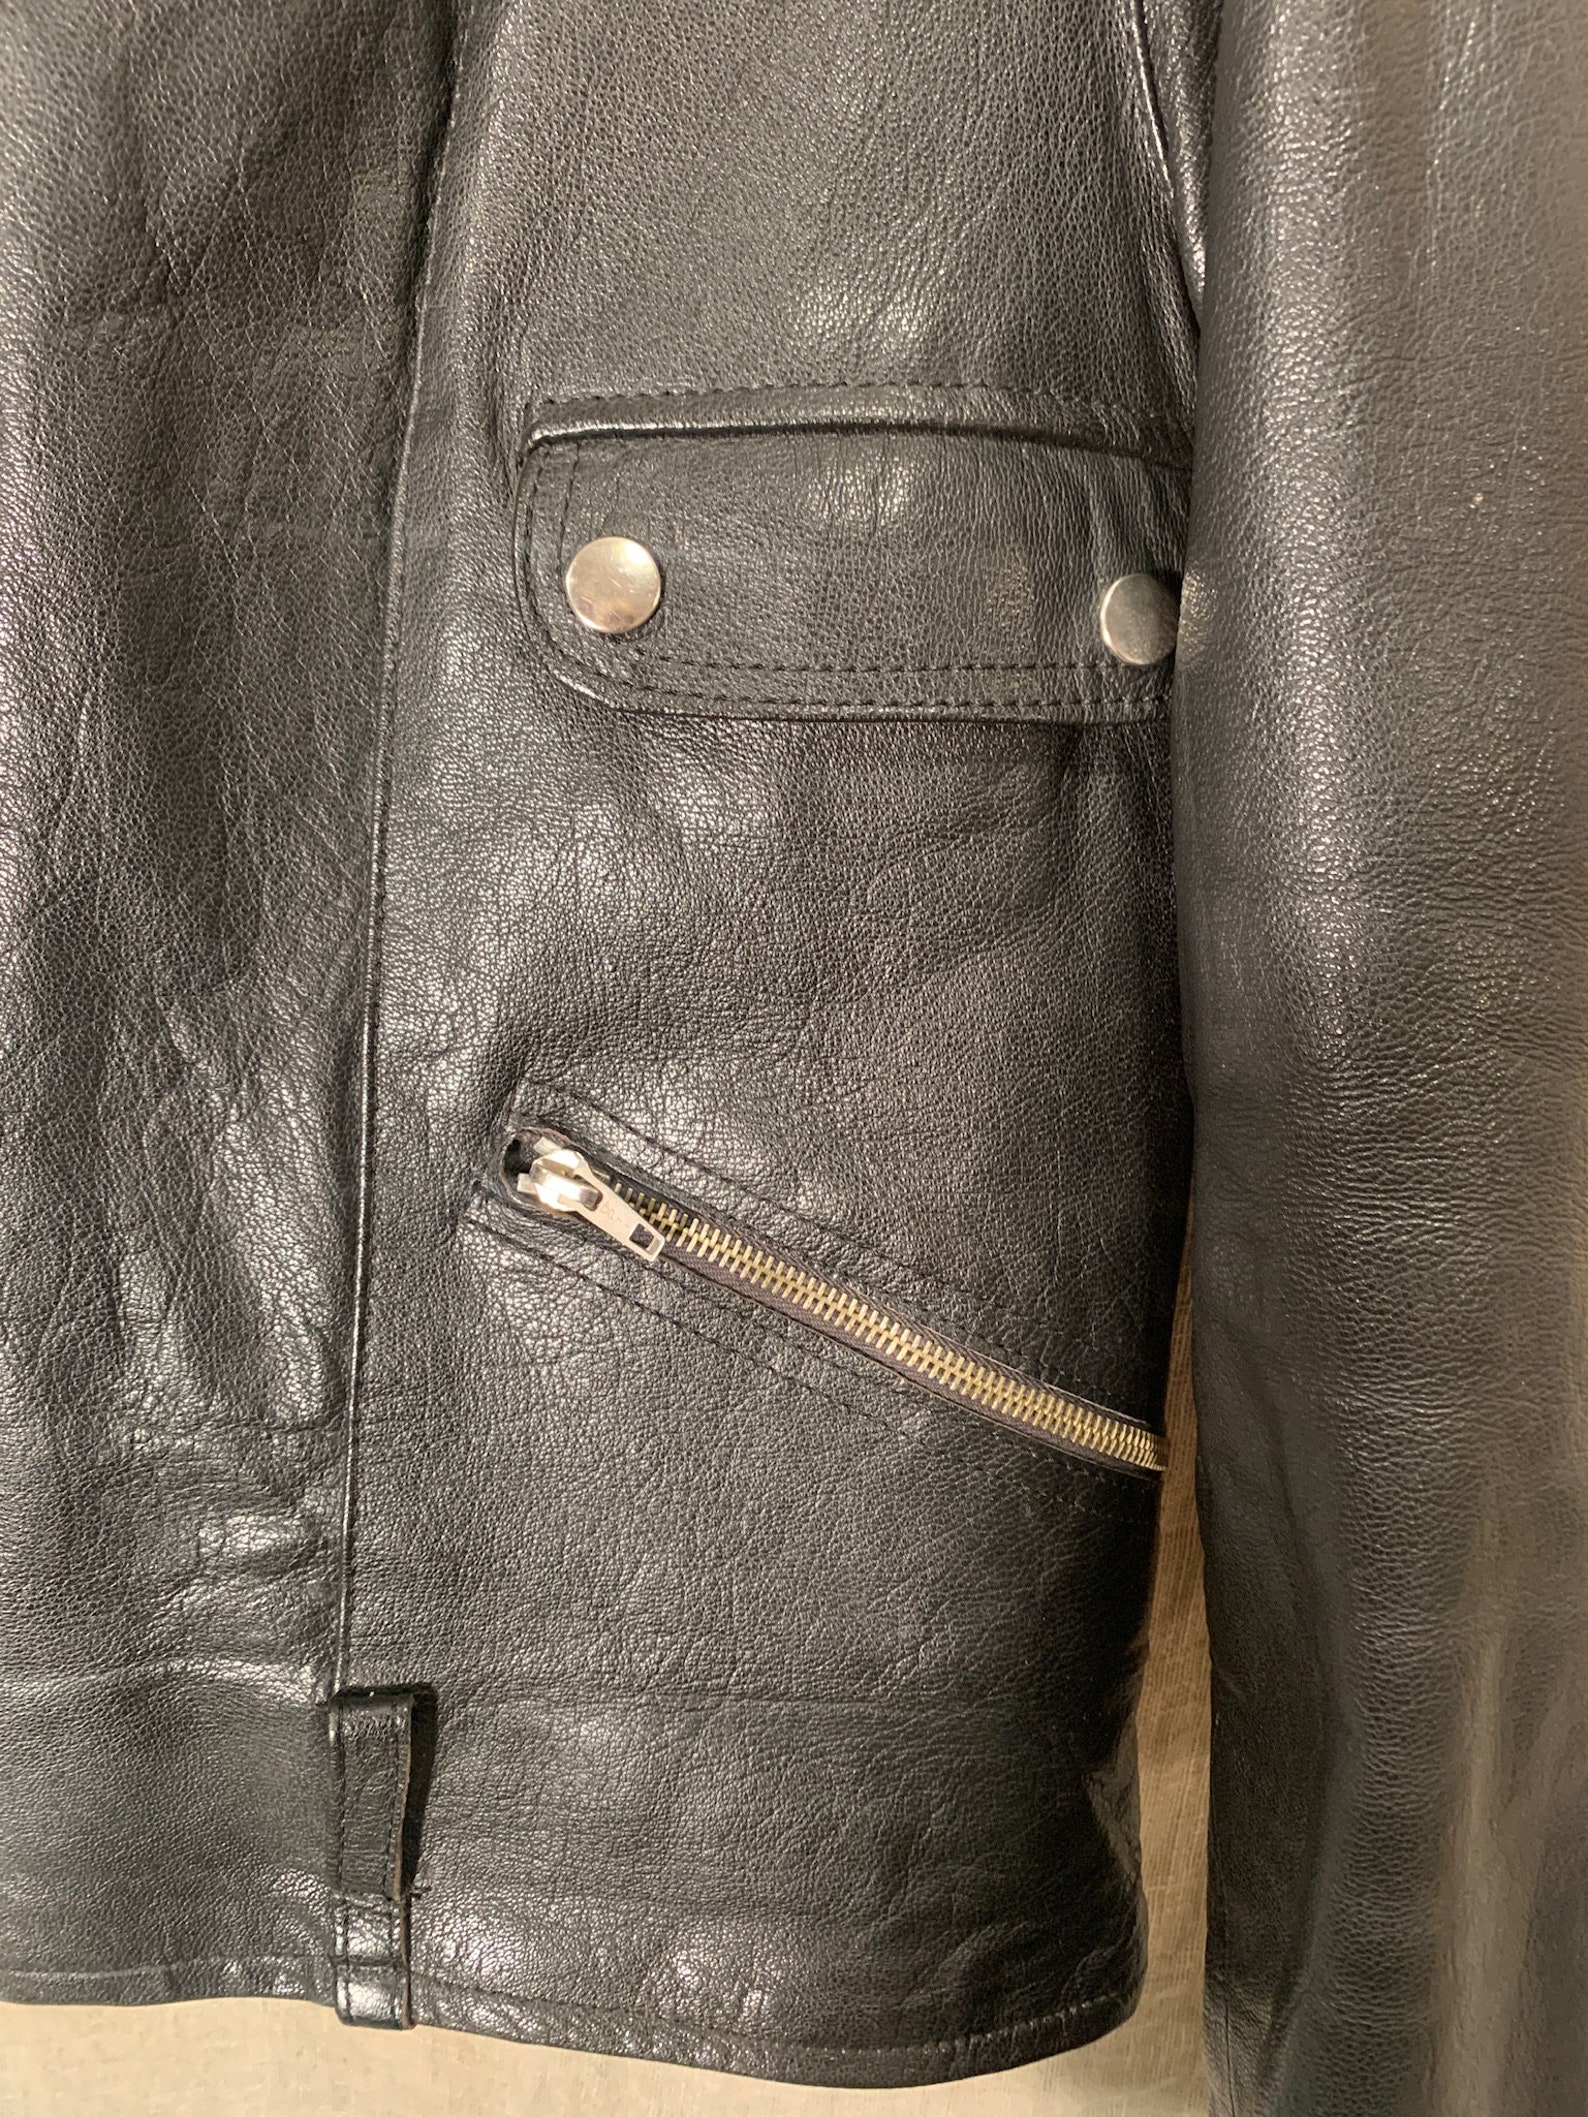 Unisex Vintage Leather Bomber Jacket with Zip & Popper | Etsy